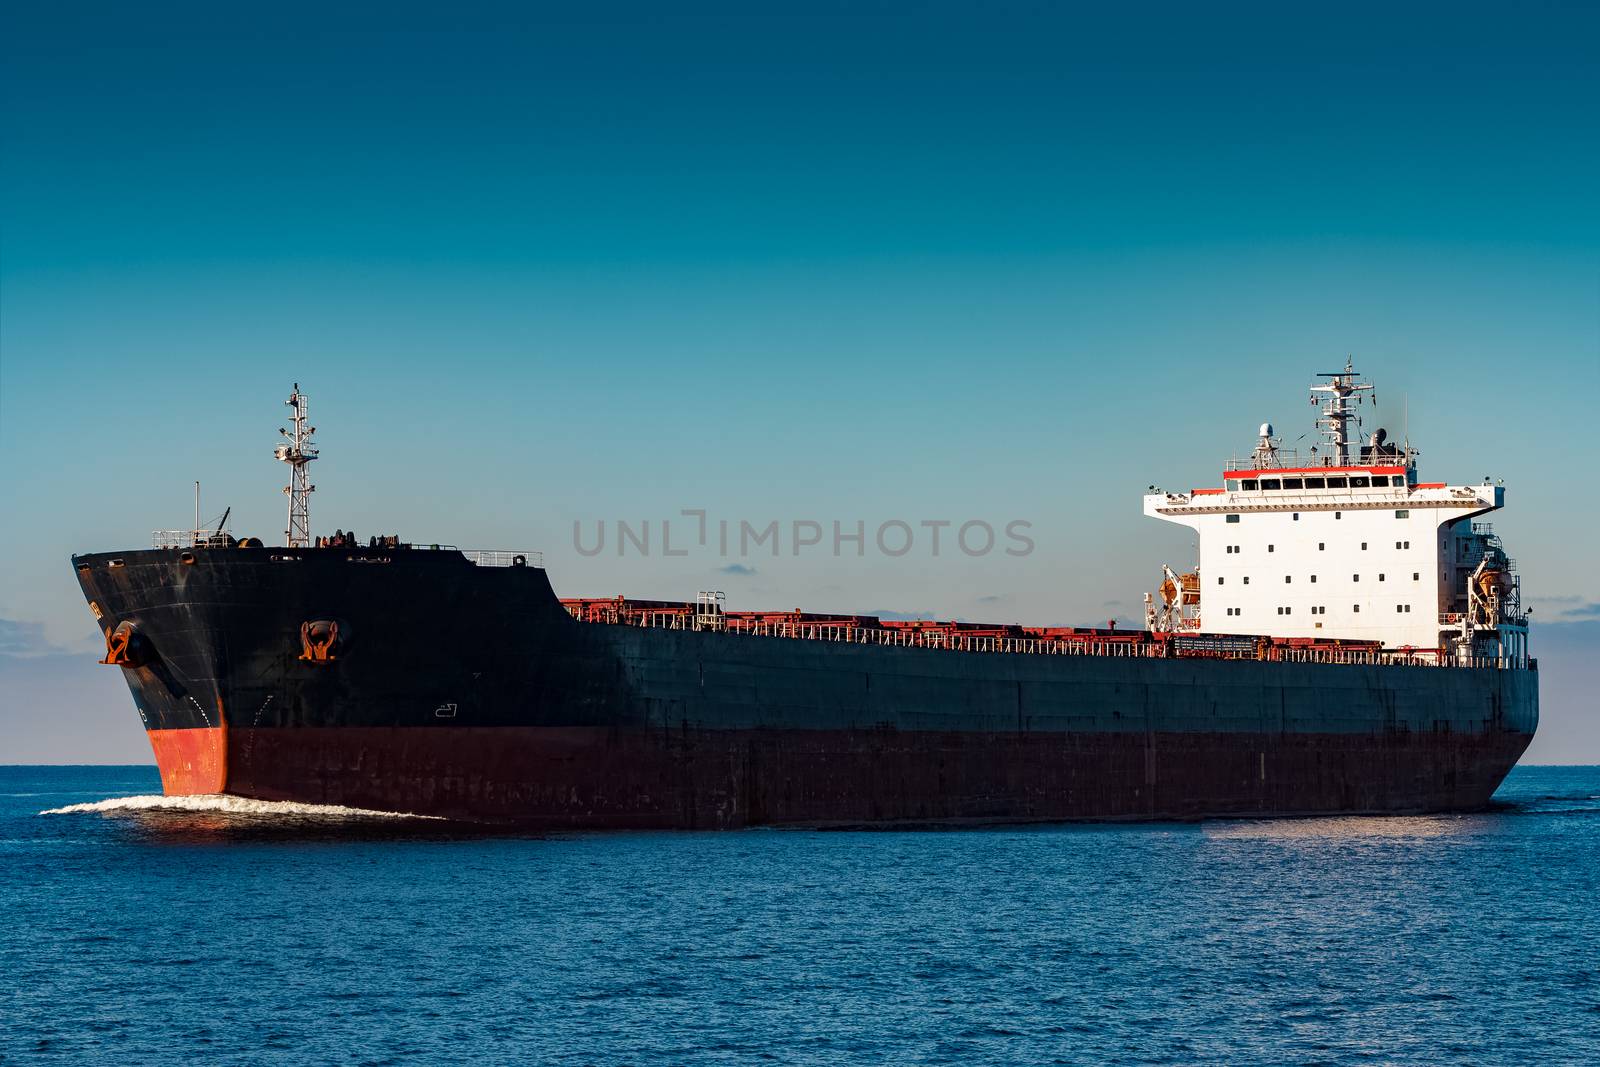 Black cargo ship by sengnsp